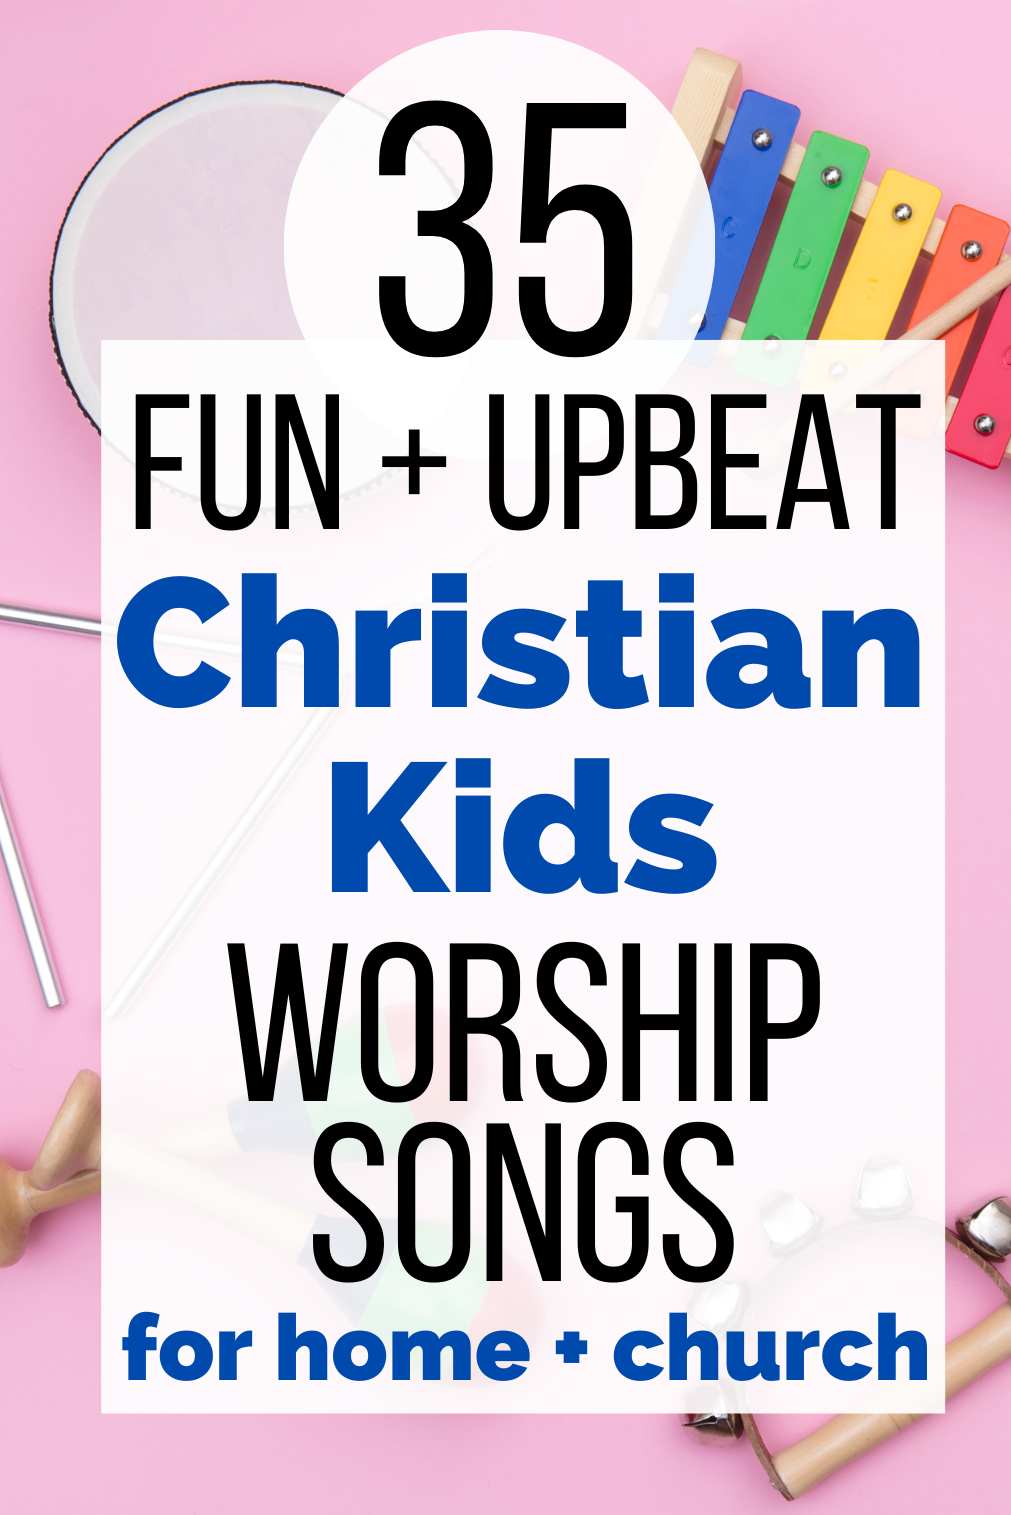 35 Top Christian Kids Worship Songs for Home + Church